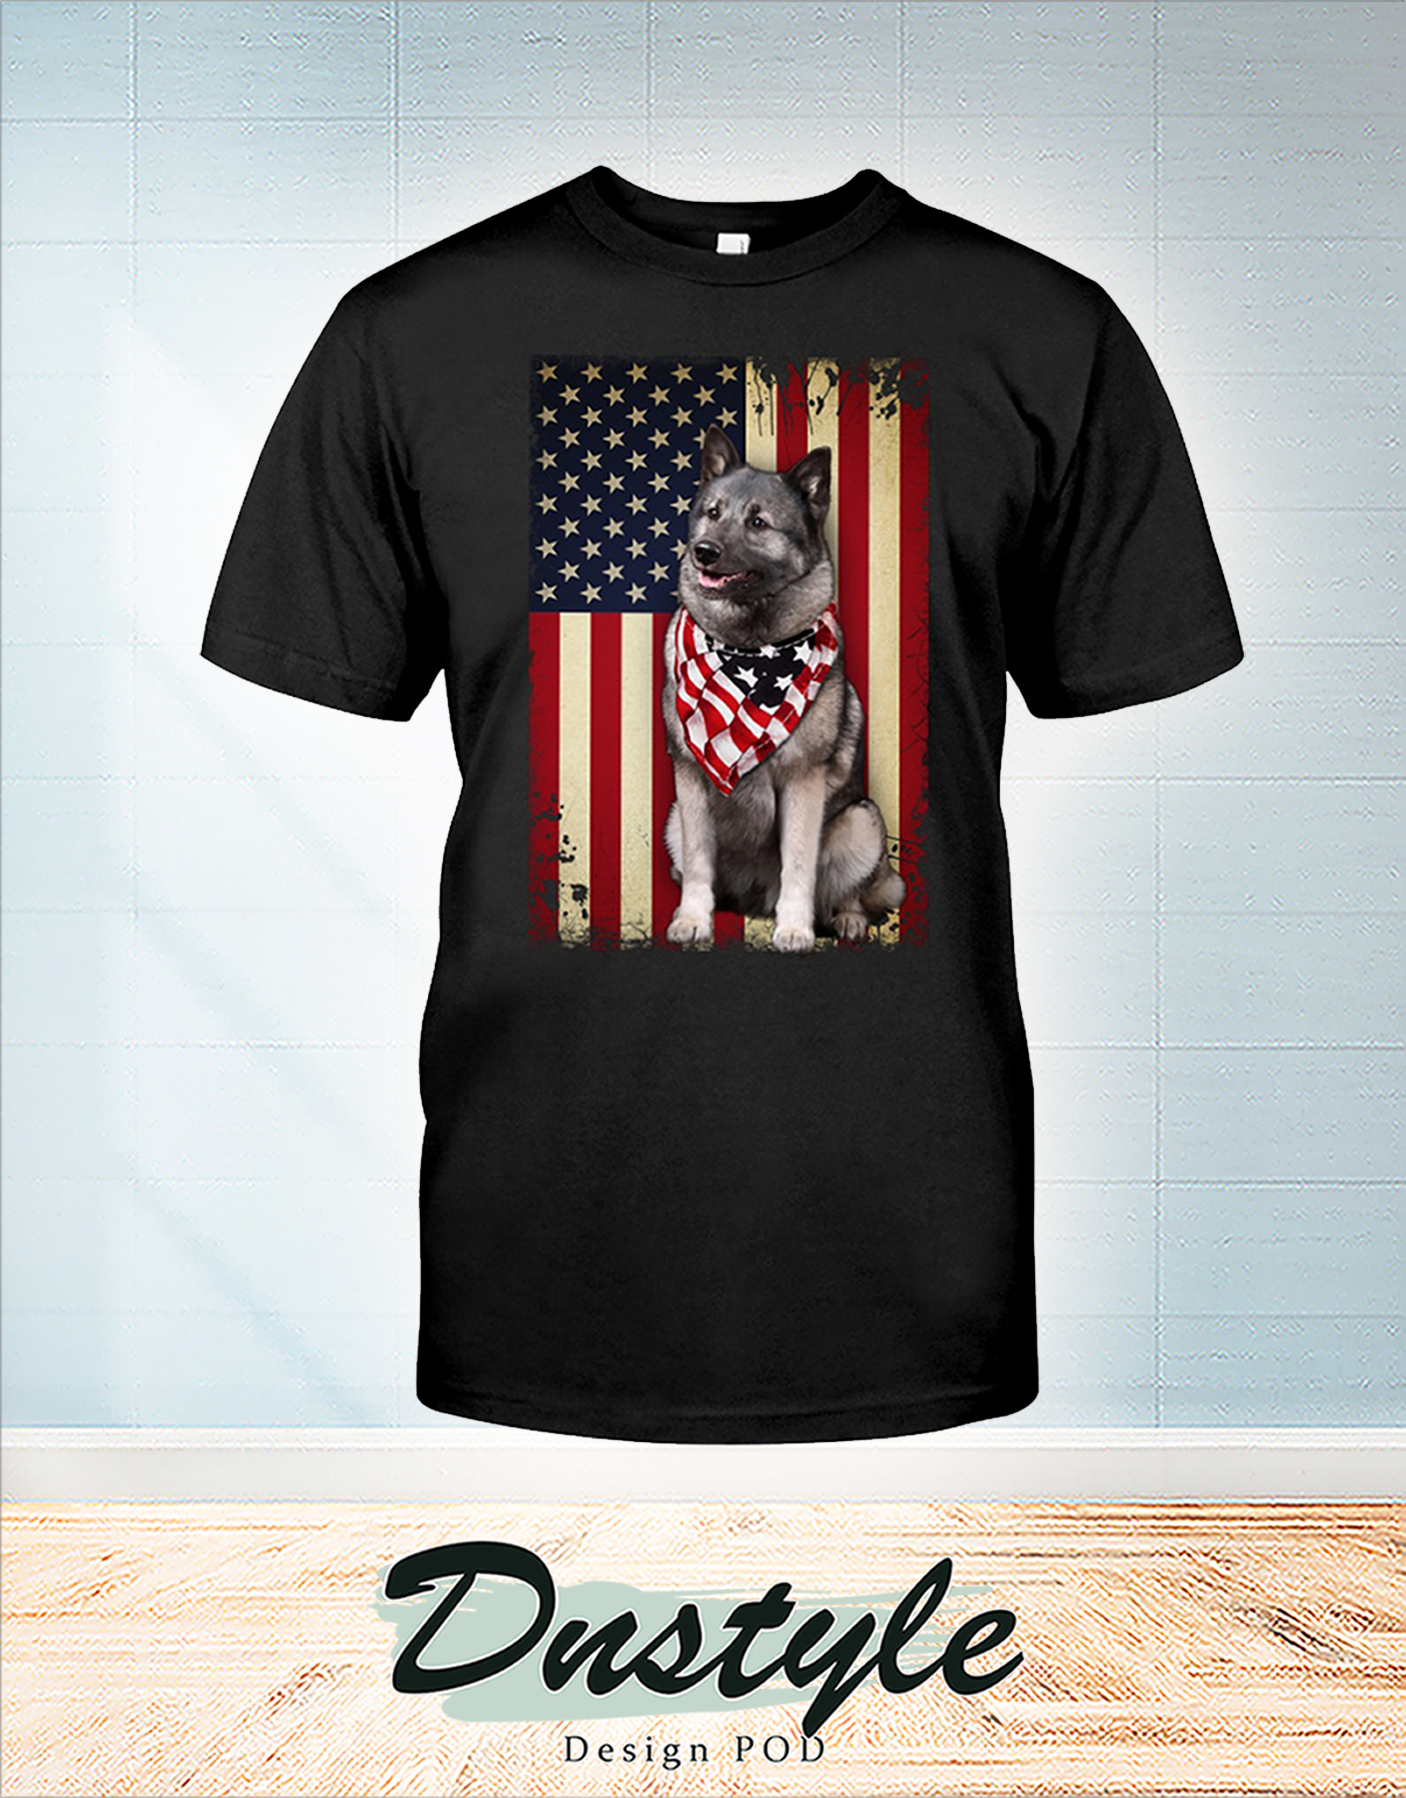 Norwegian Elkhound smile american flag 4th of July shirt